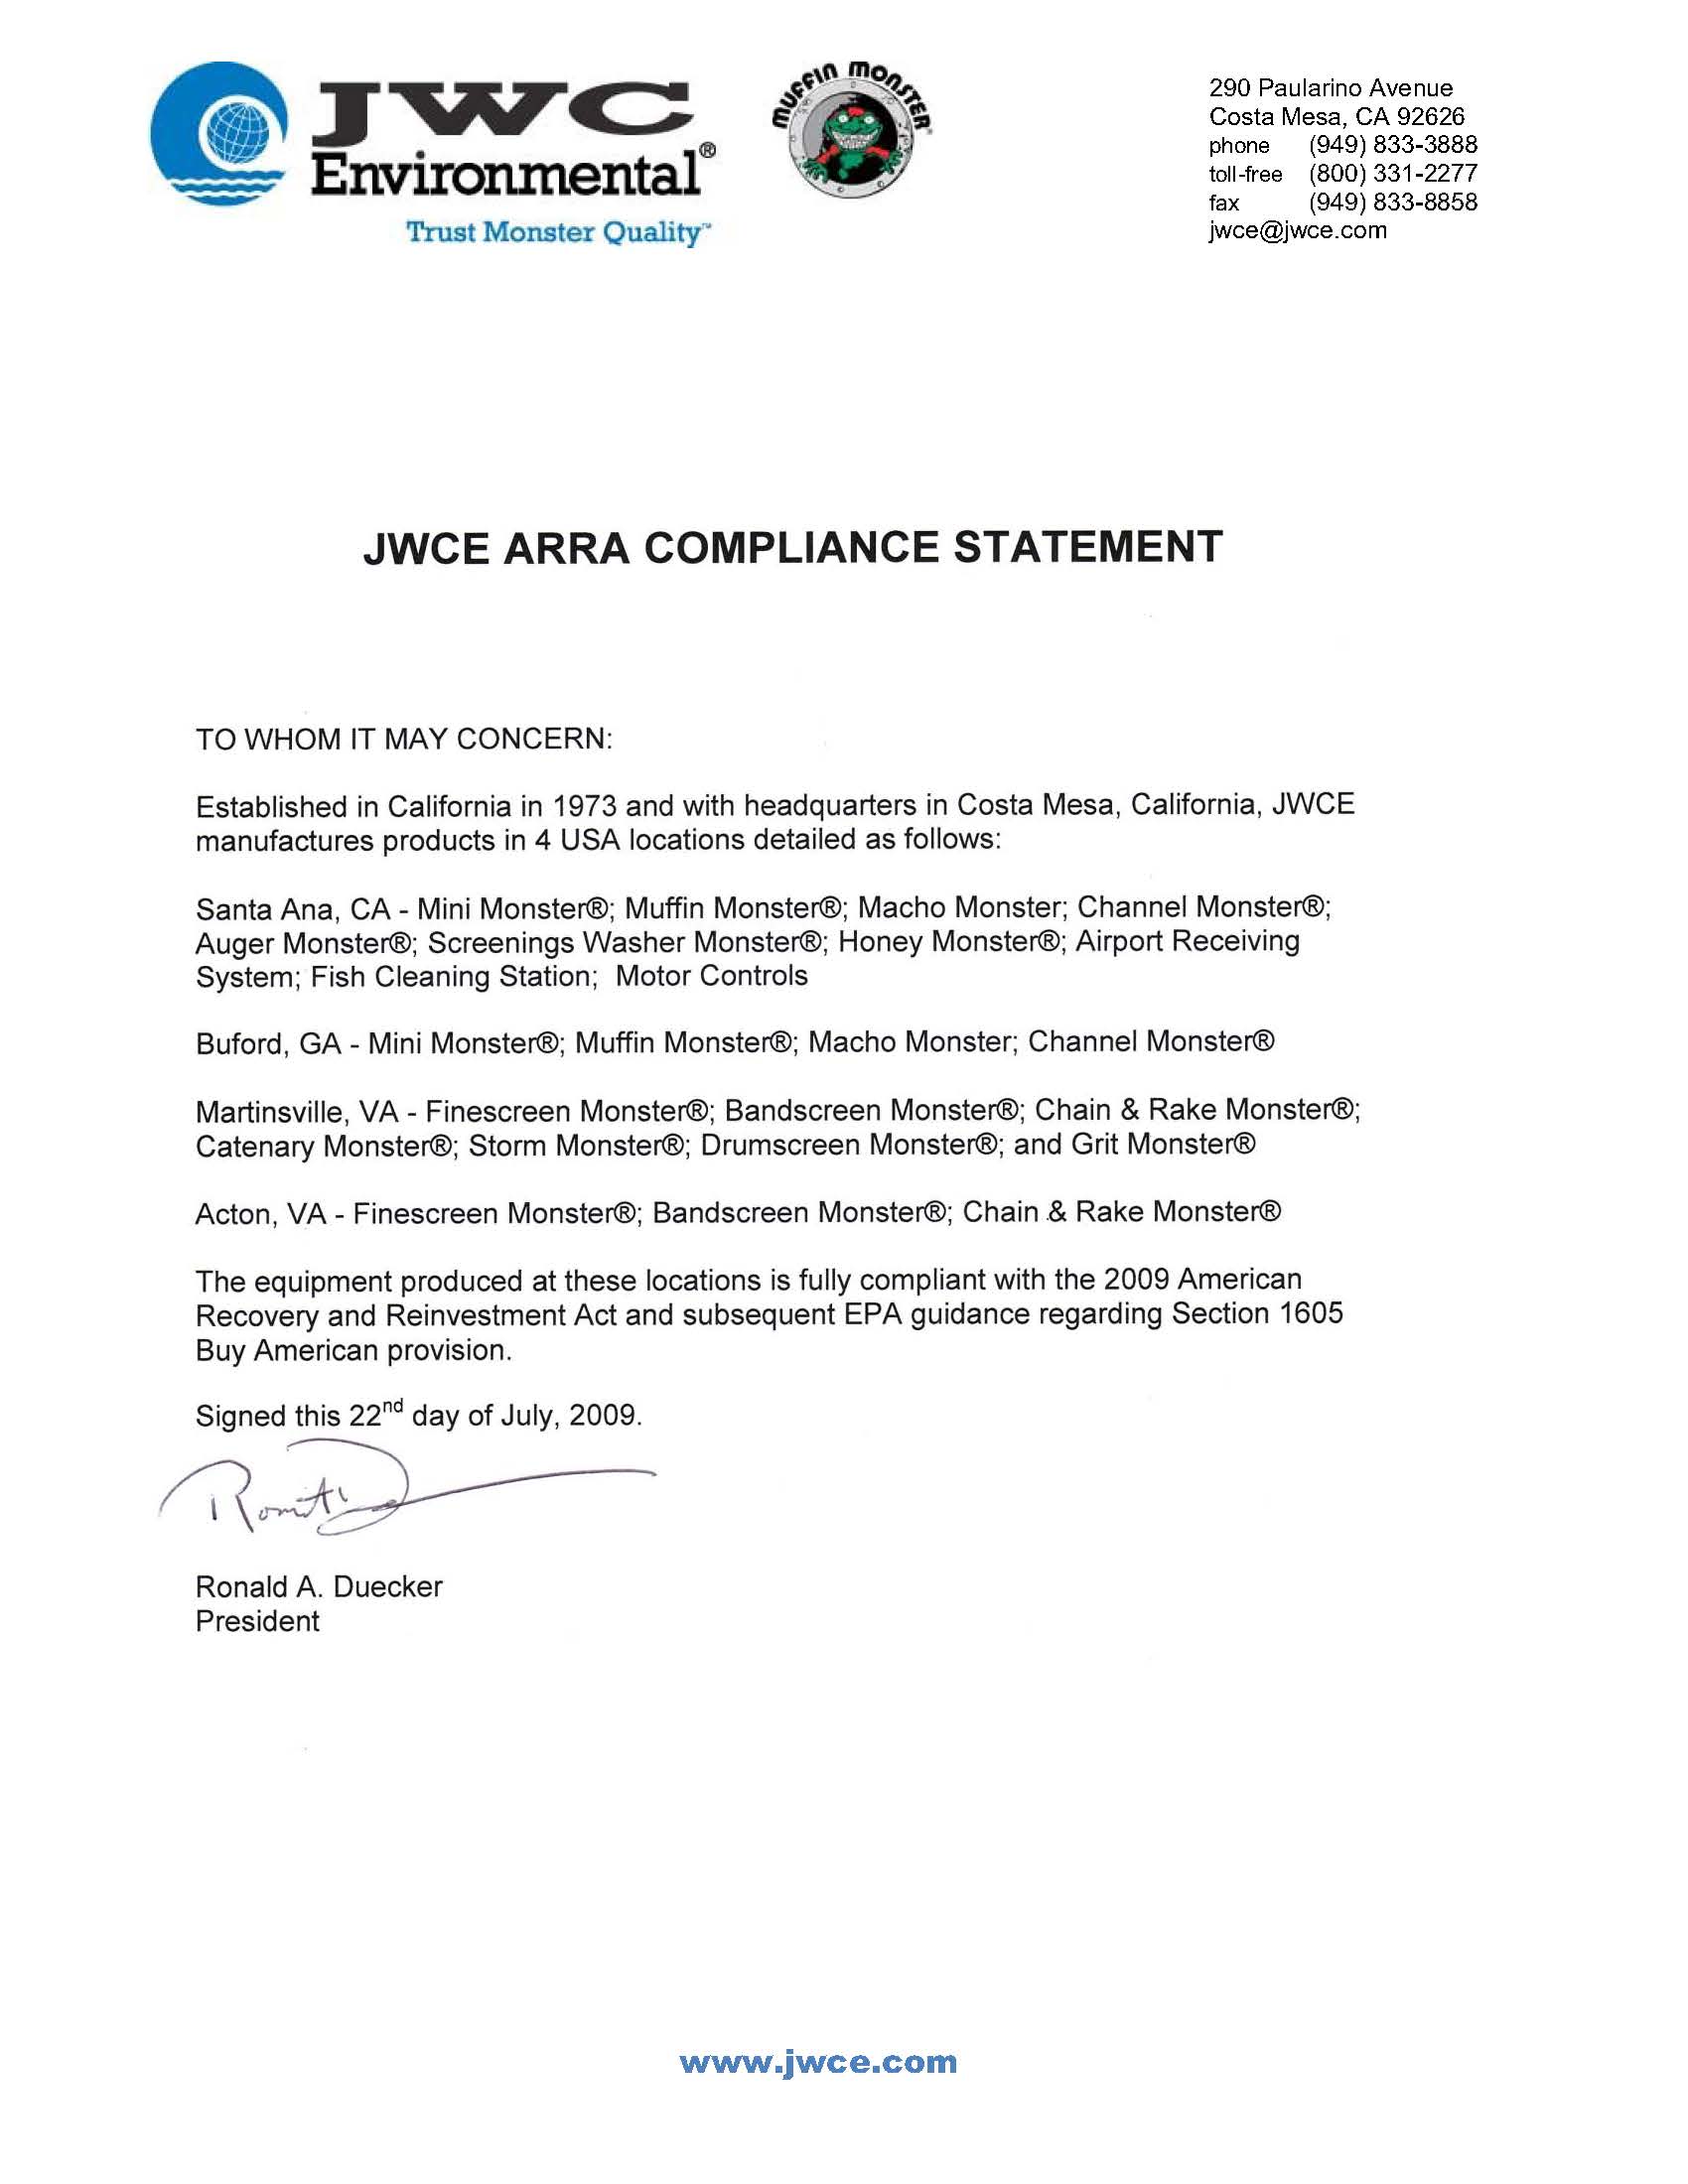 JWC ARRA Certificate Compliance Letter